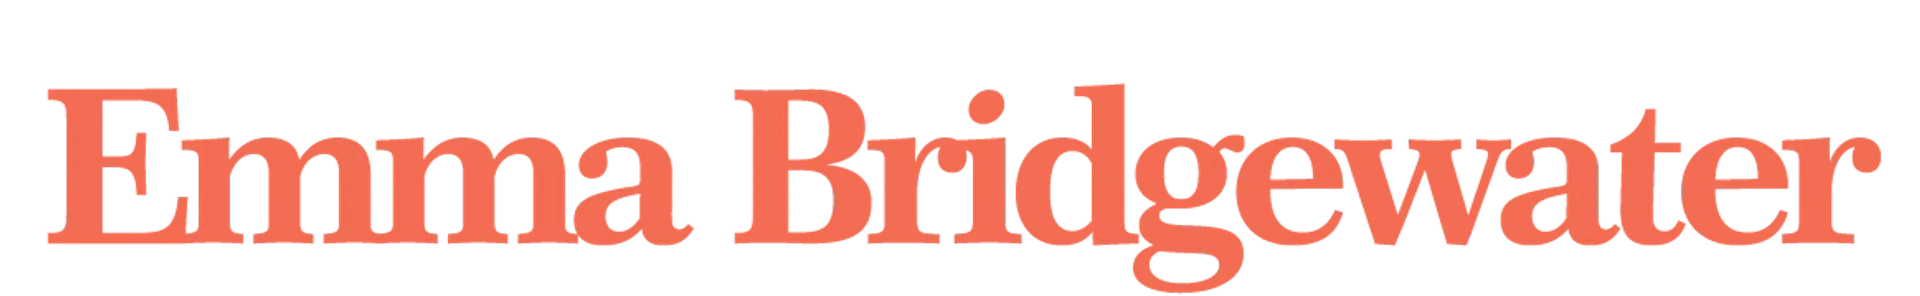 EMMA BRIDGEWATER logo